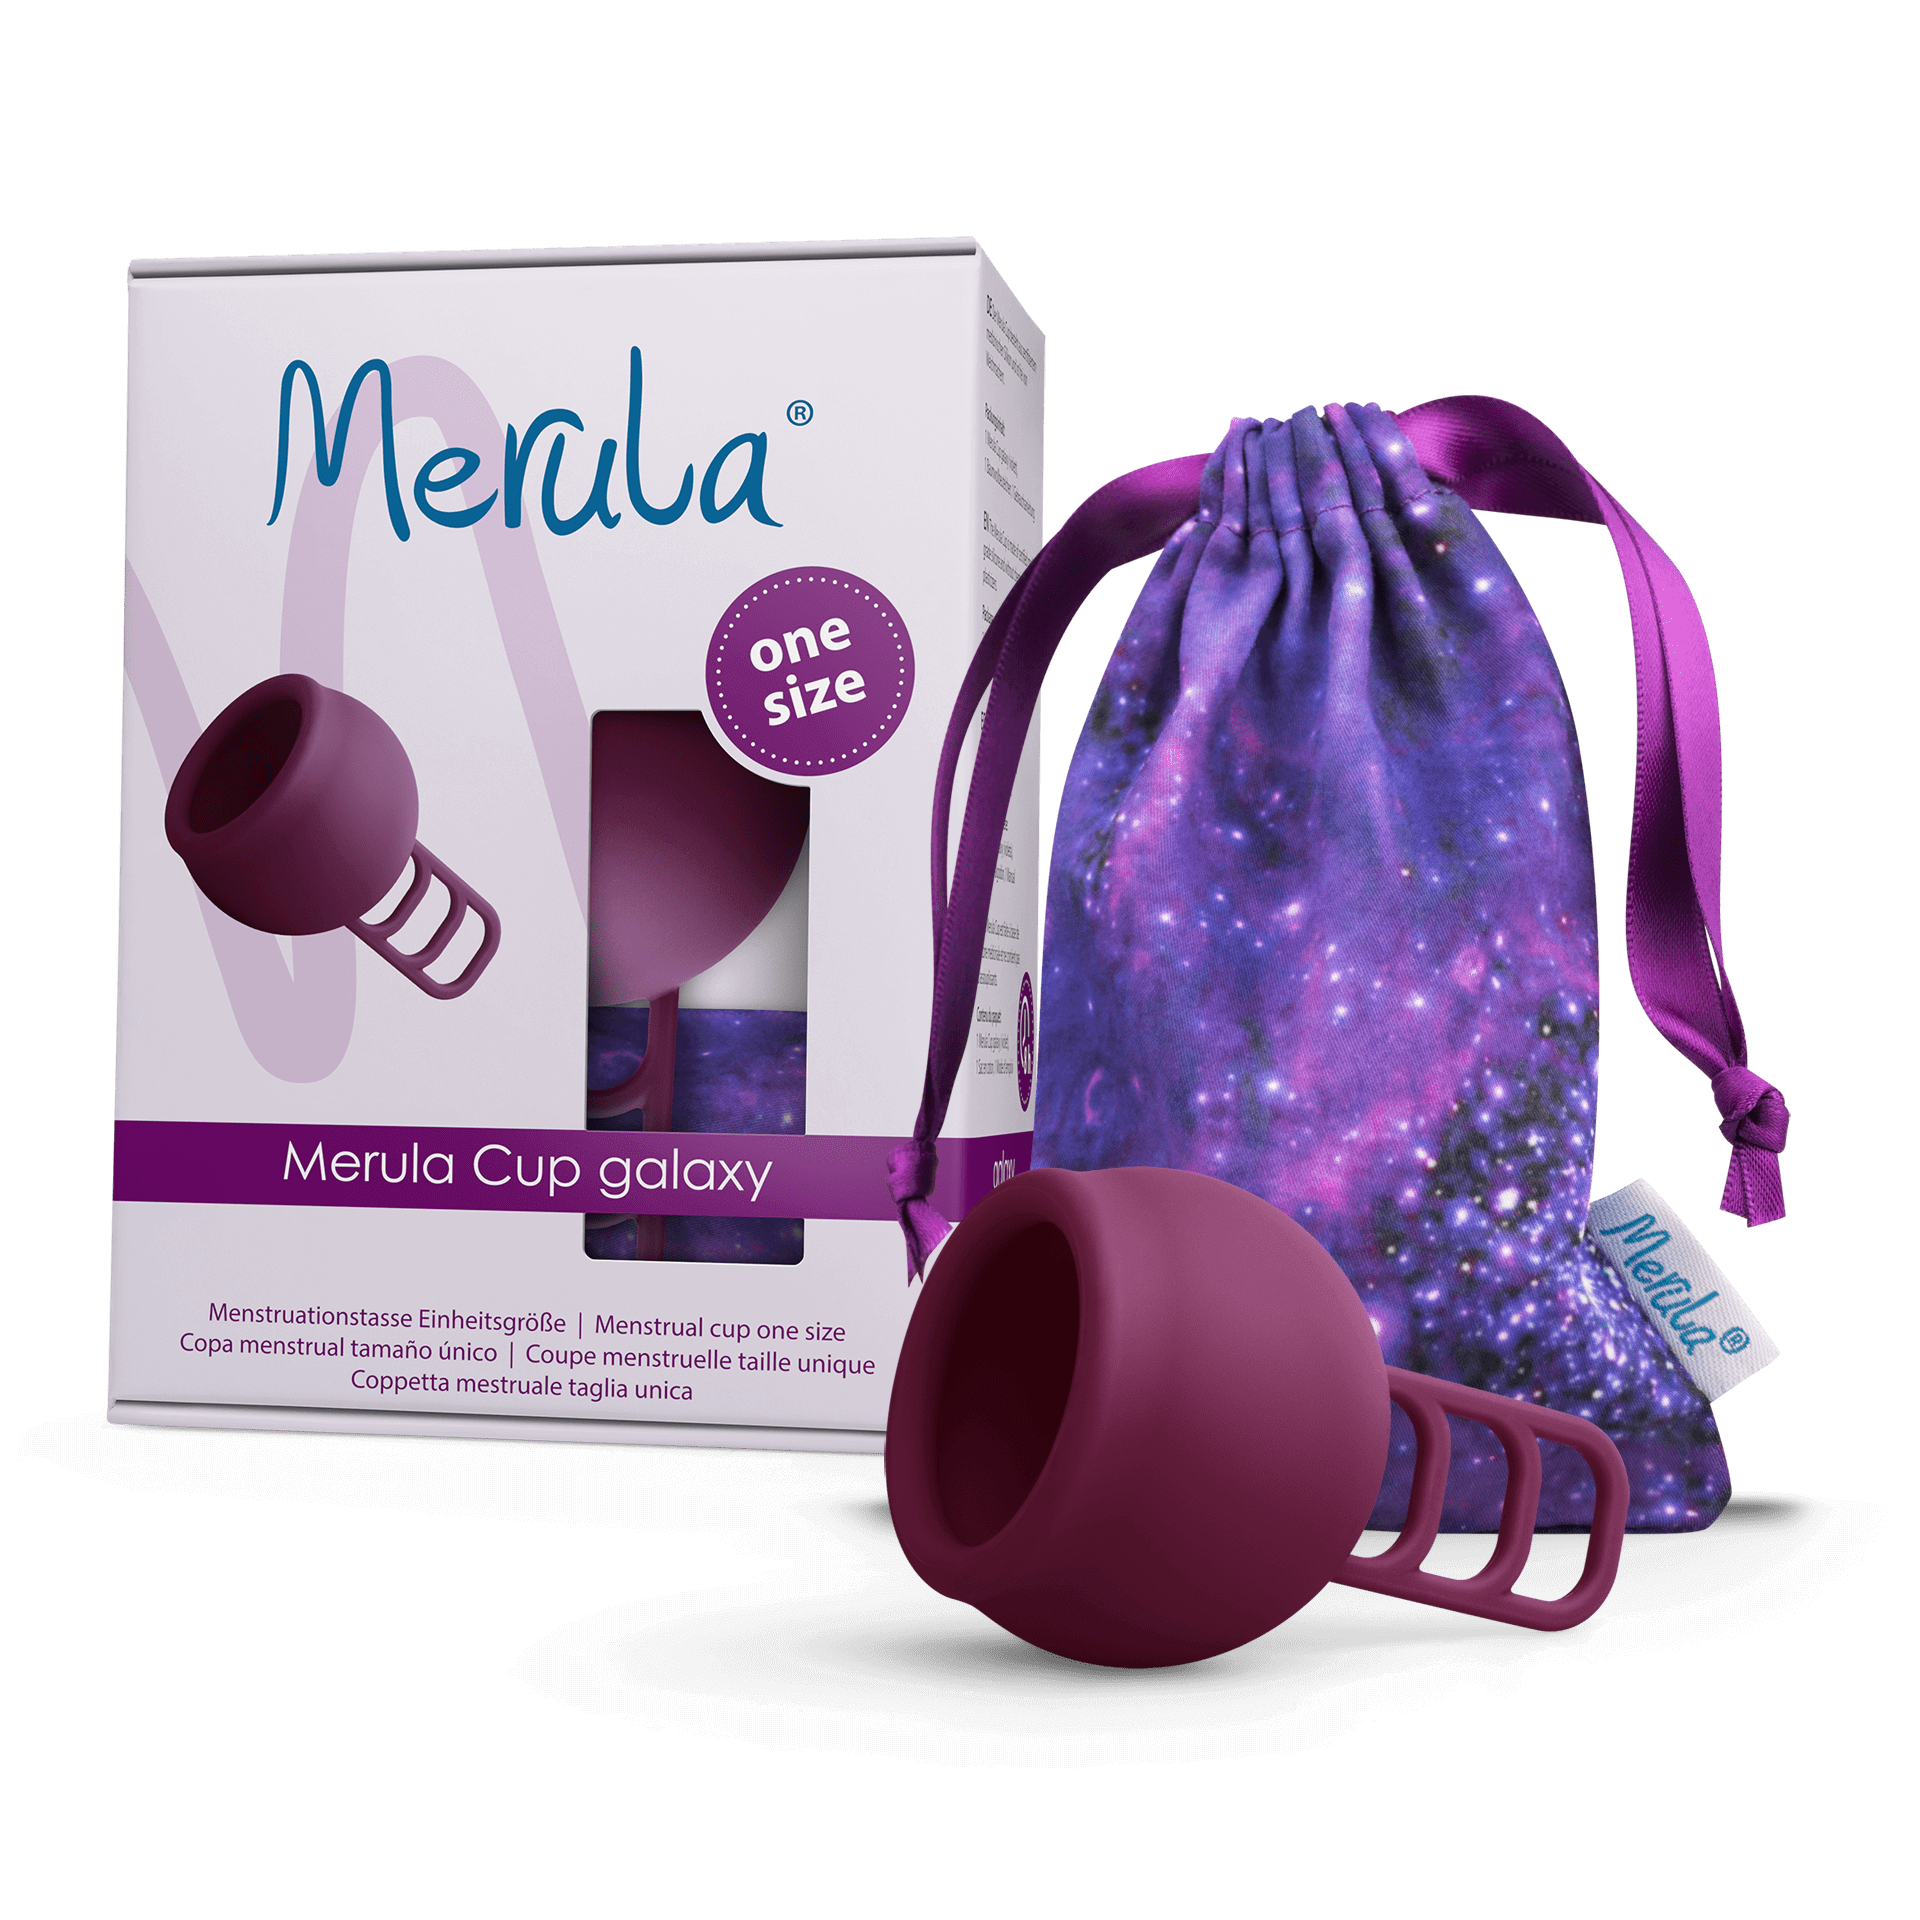 Merula Menstruationstasse one size galaxy